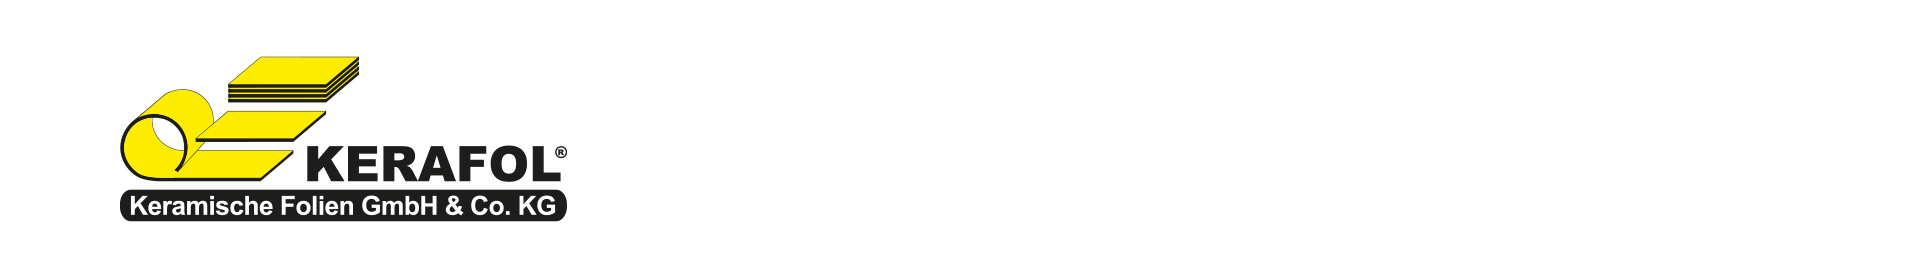 Kerafol Logo